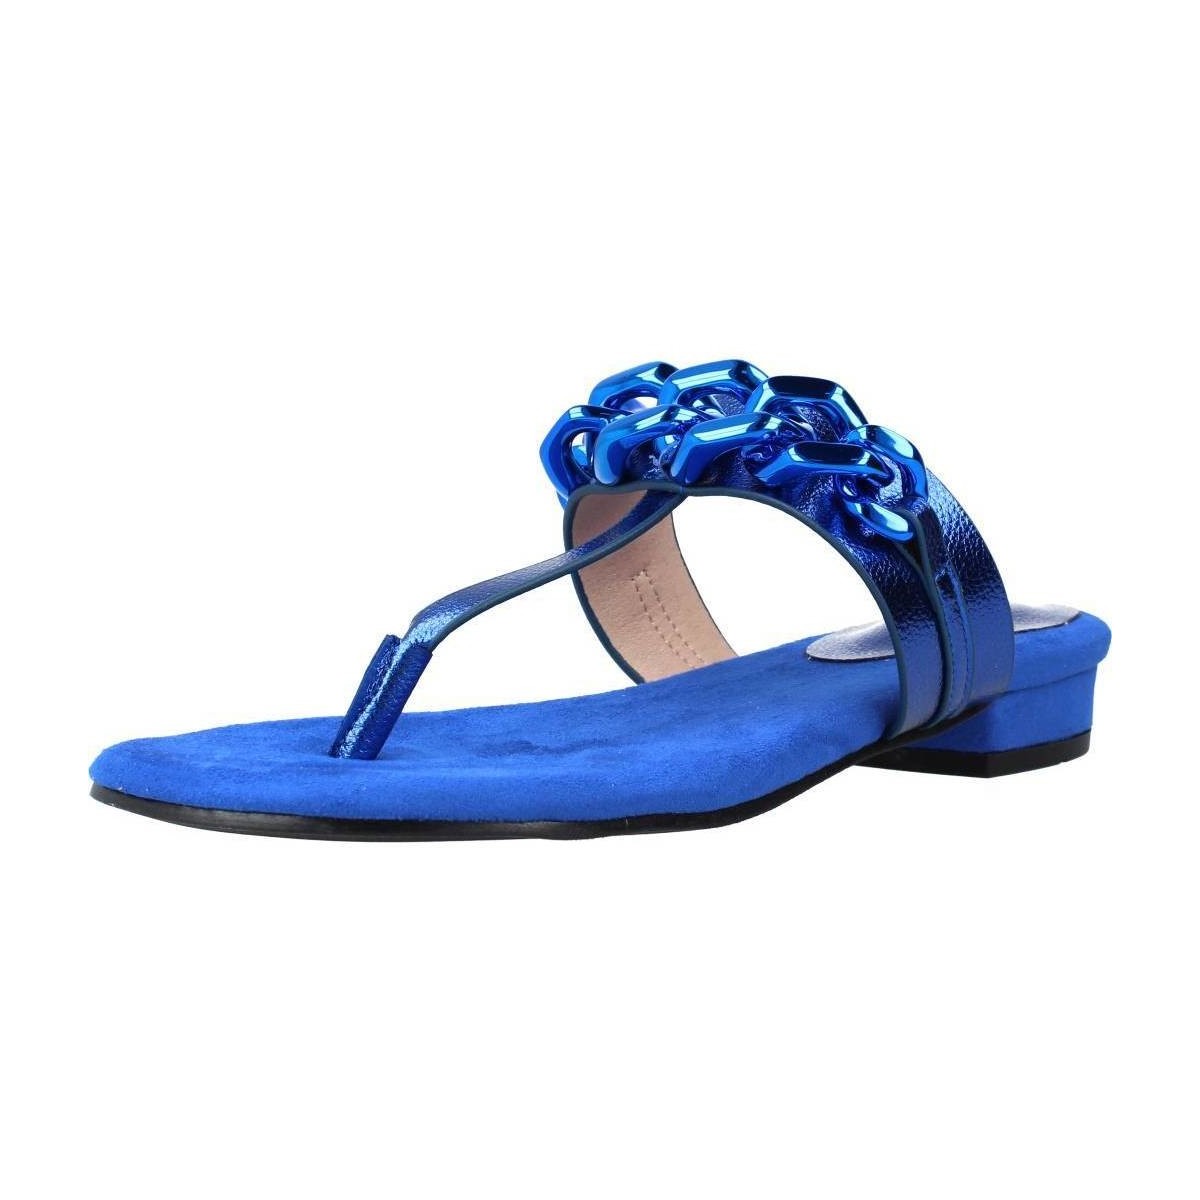 Topánky Žena Sandále Menbur 22784M Modrá